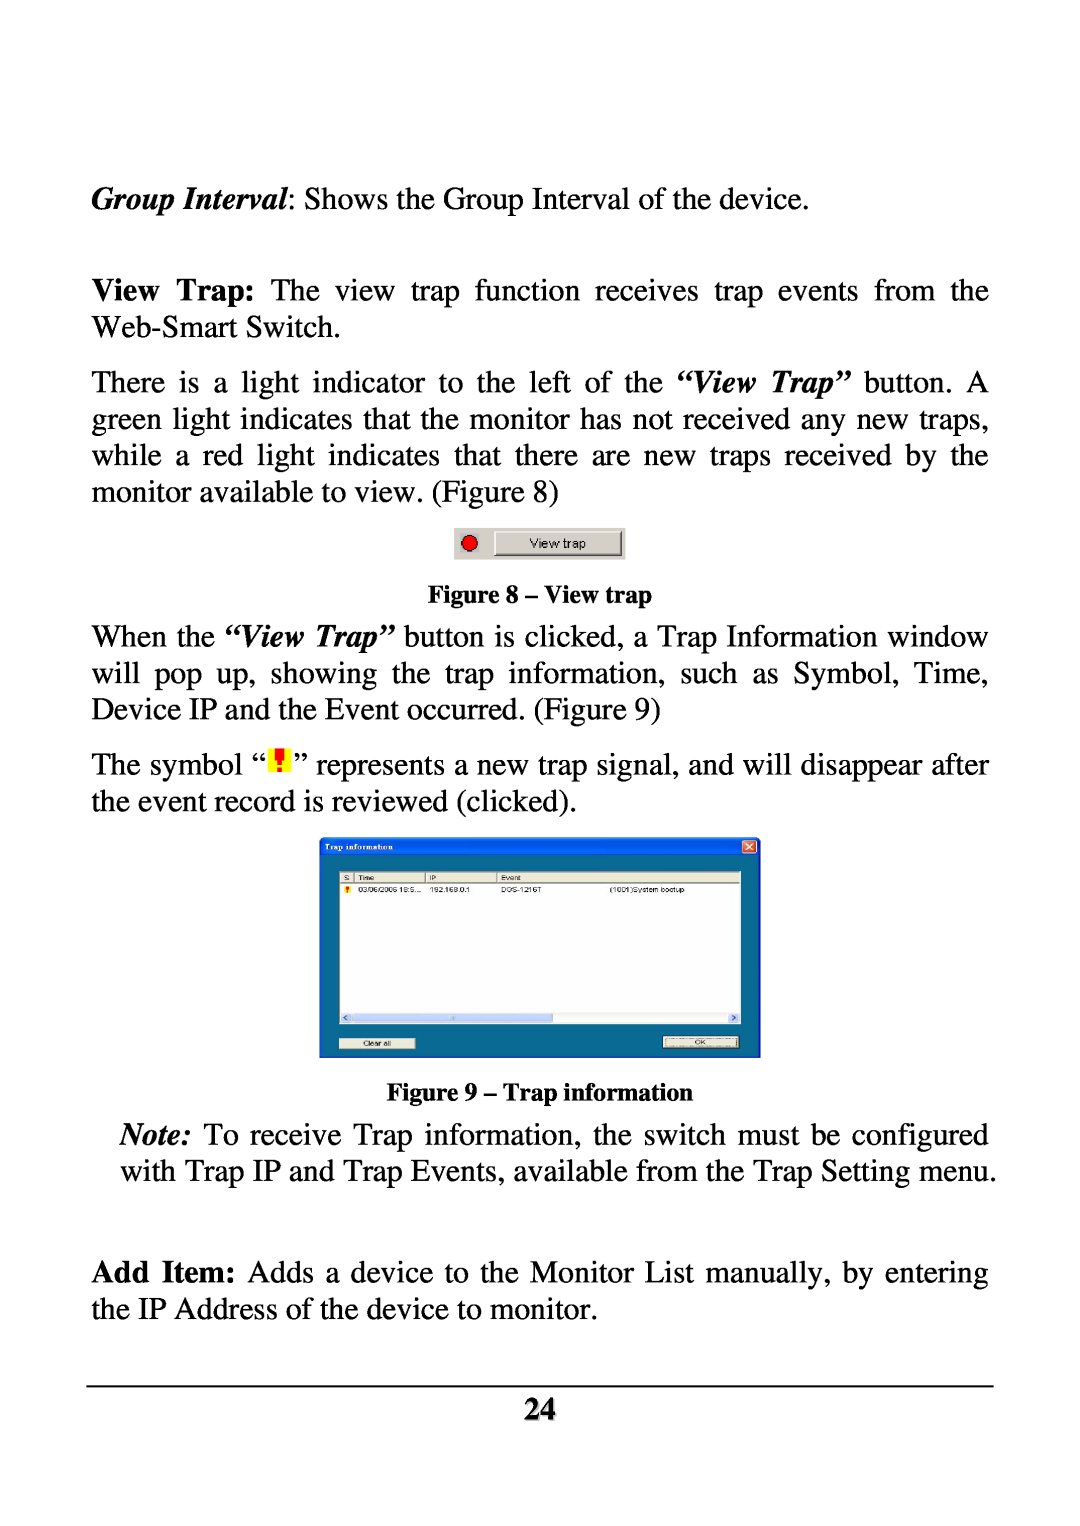 D-Link DES-1228 user manual View trap, Trap information 